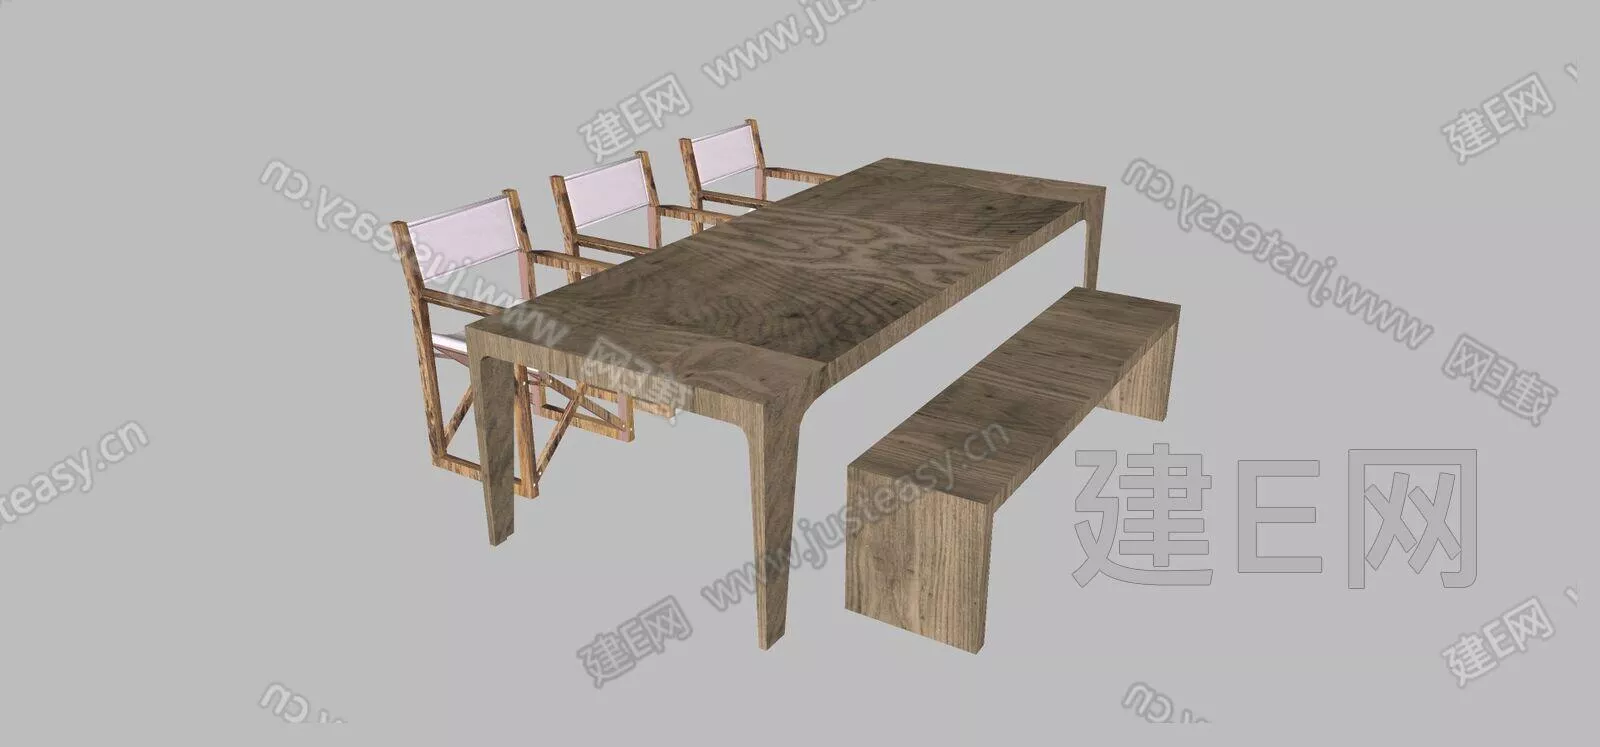 NORDIC OUTDOOR TABLE SET - SKETCHUP 3D MODEL - ENSCAPE - 110575796